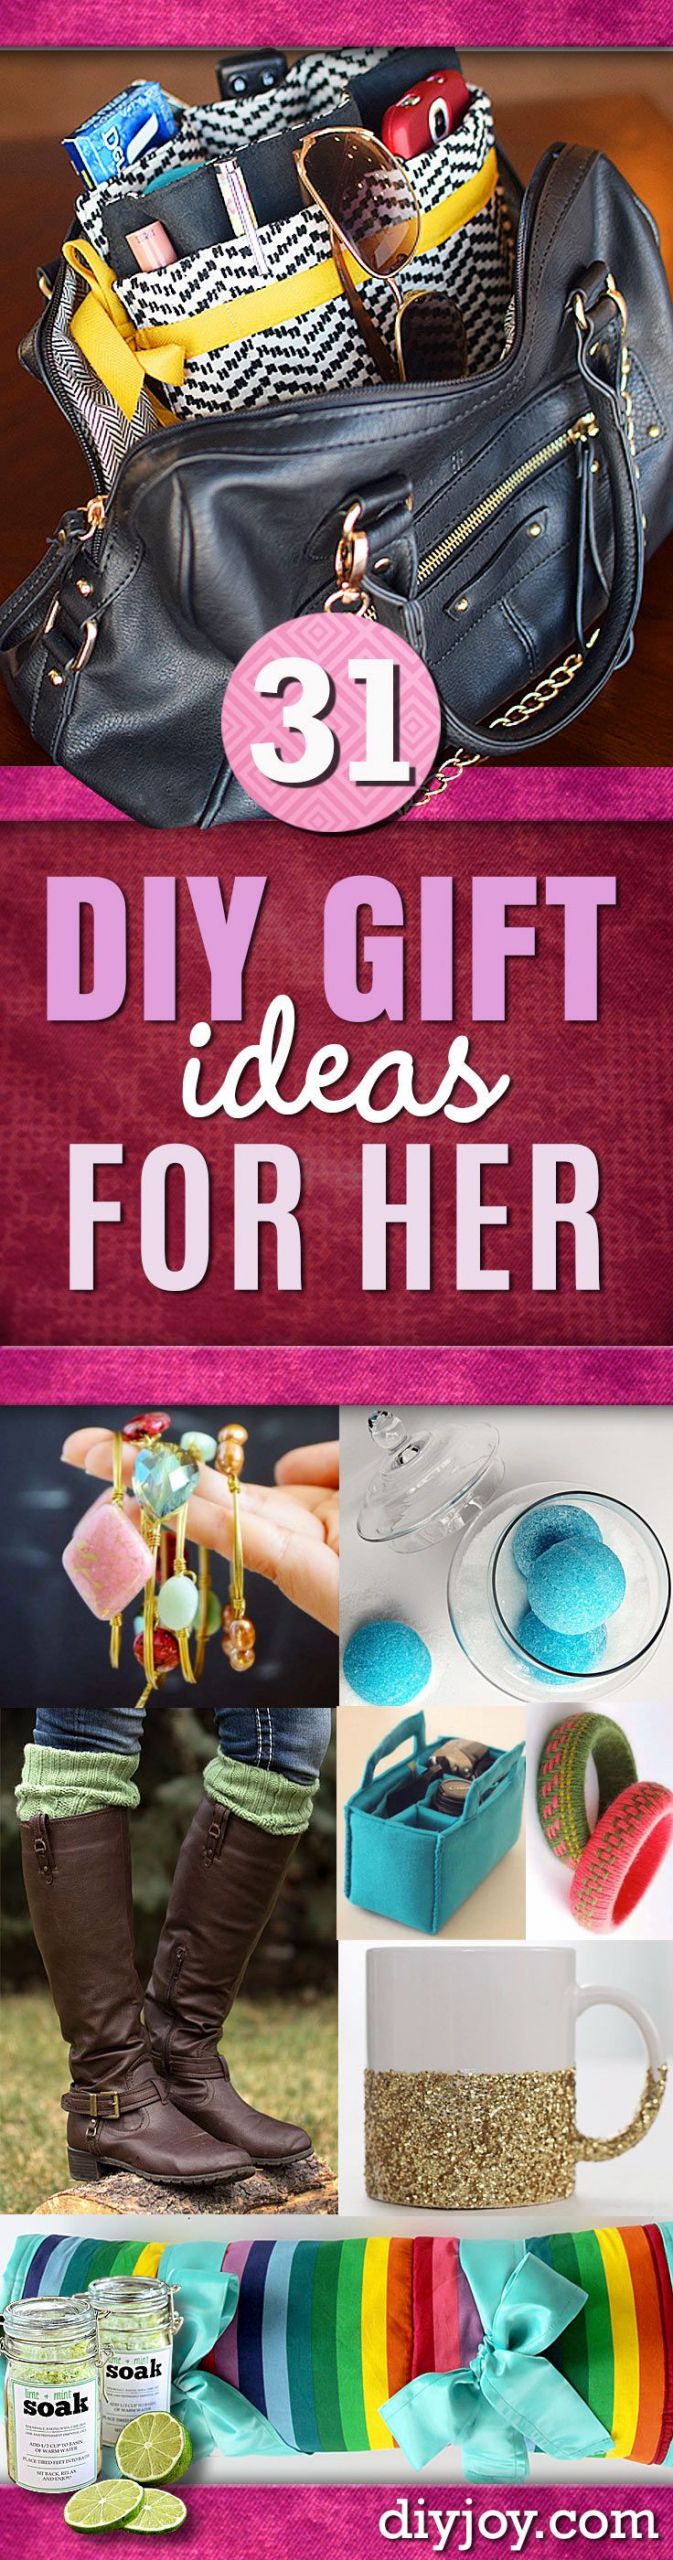 Girlfriend Gift Ideas Pinterest
 Super Special DIY Gift Ideas for Her DIY JOY